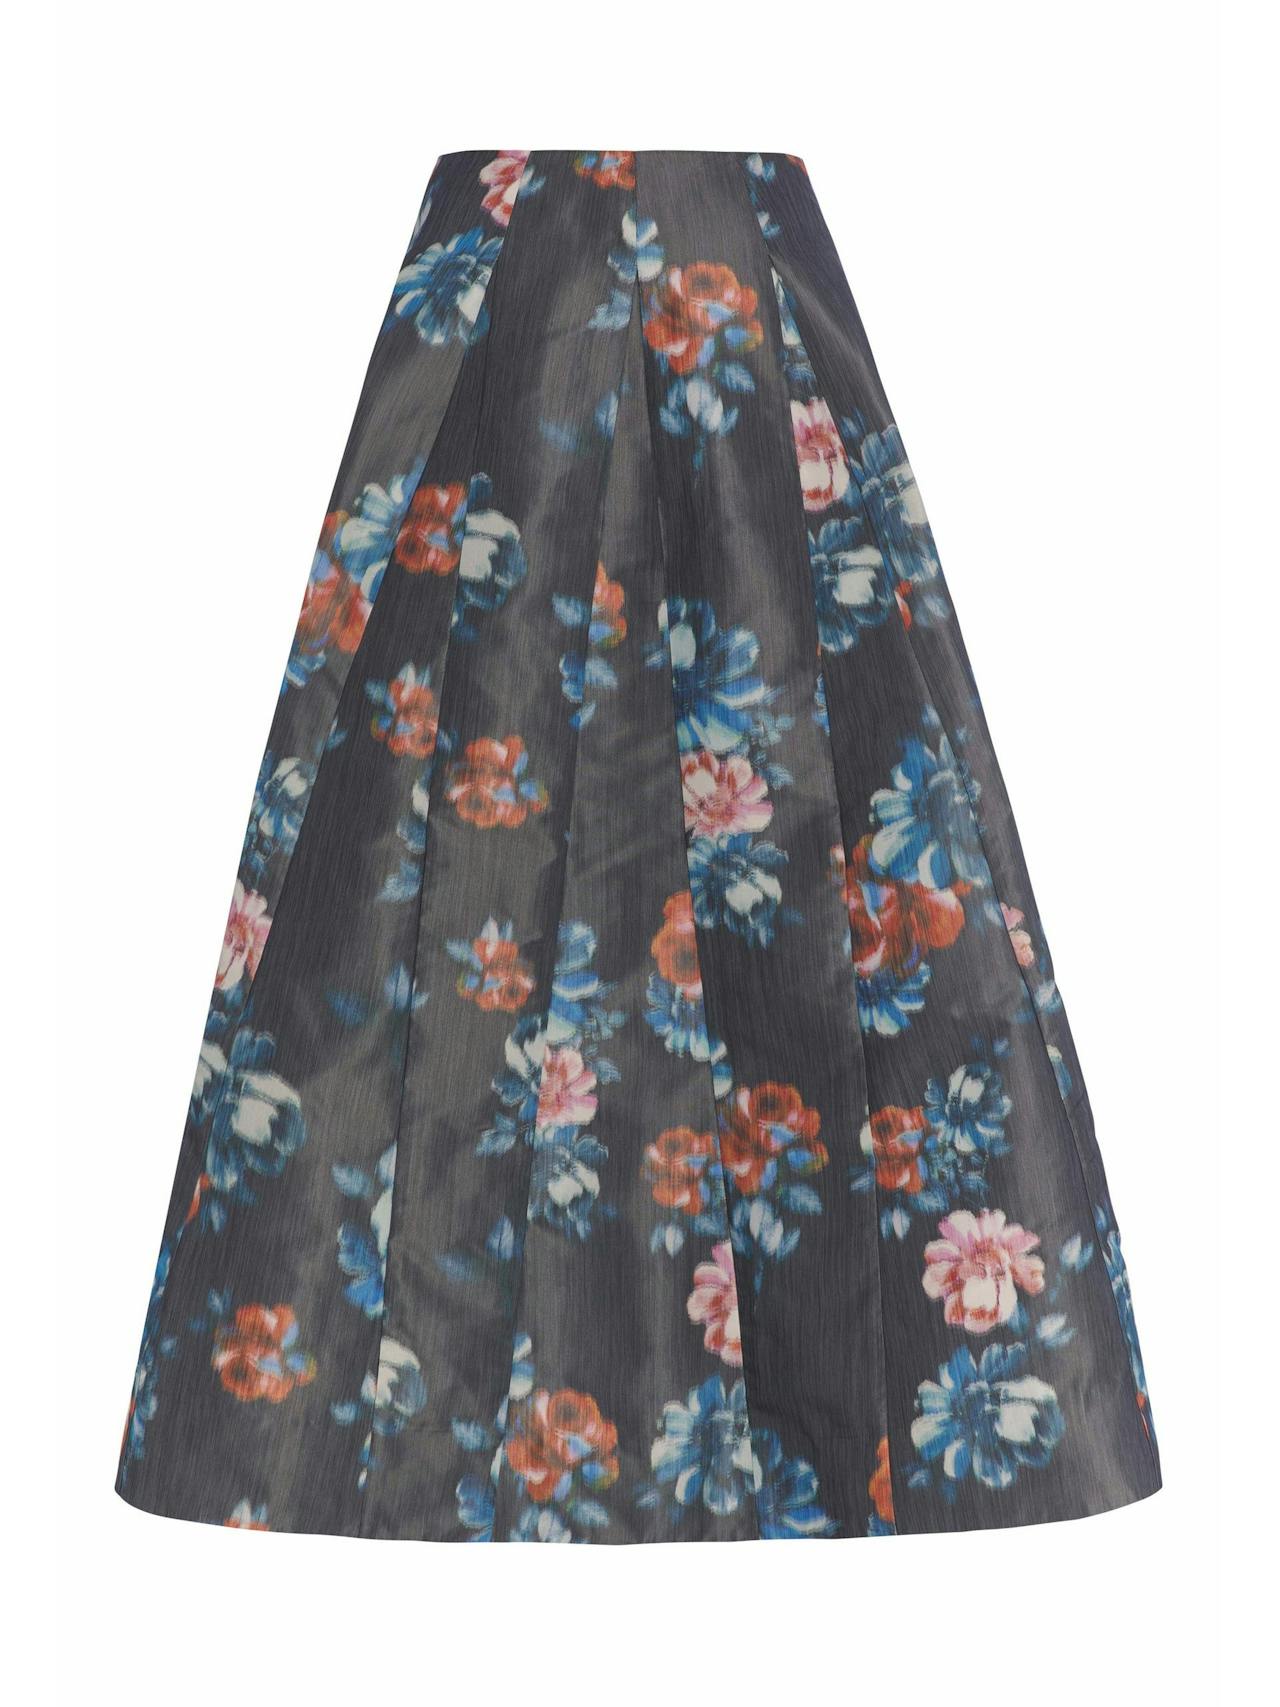 Dark floral Ikat Marjorie skirt